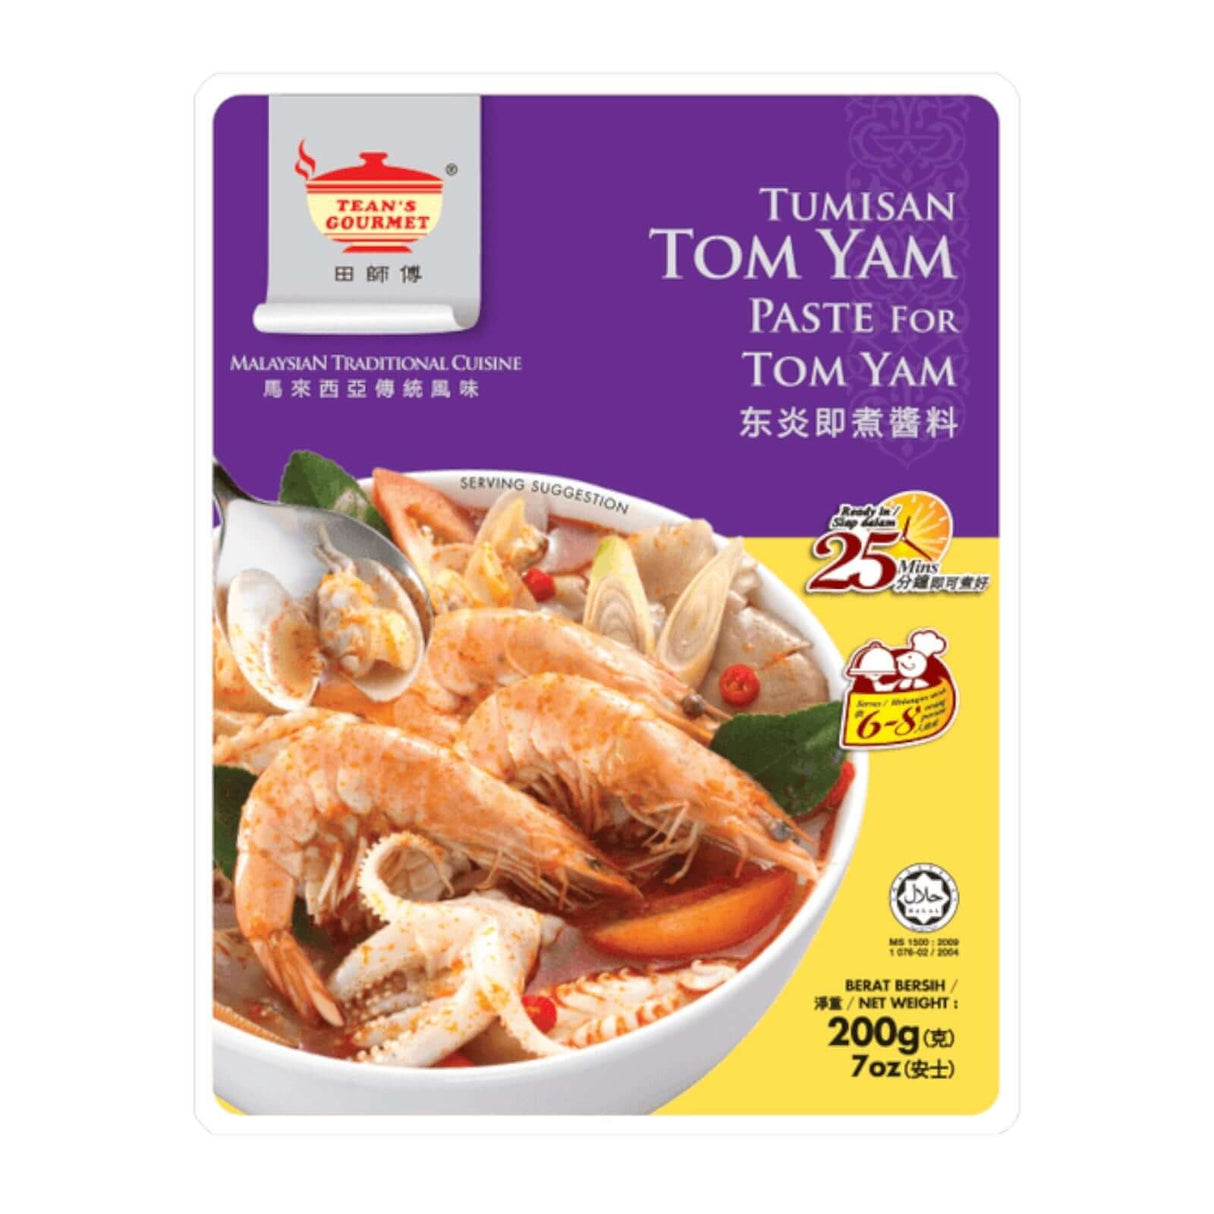 Tean's Gourmet Tumisan Tom Yam Paste for Tom Yam